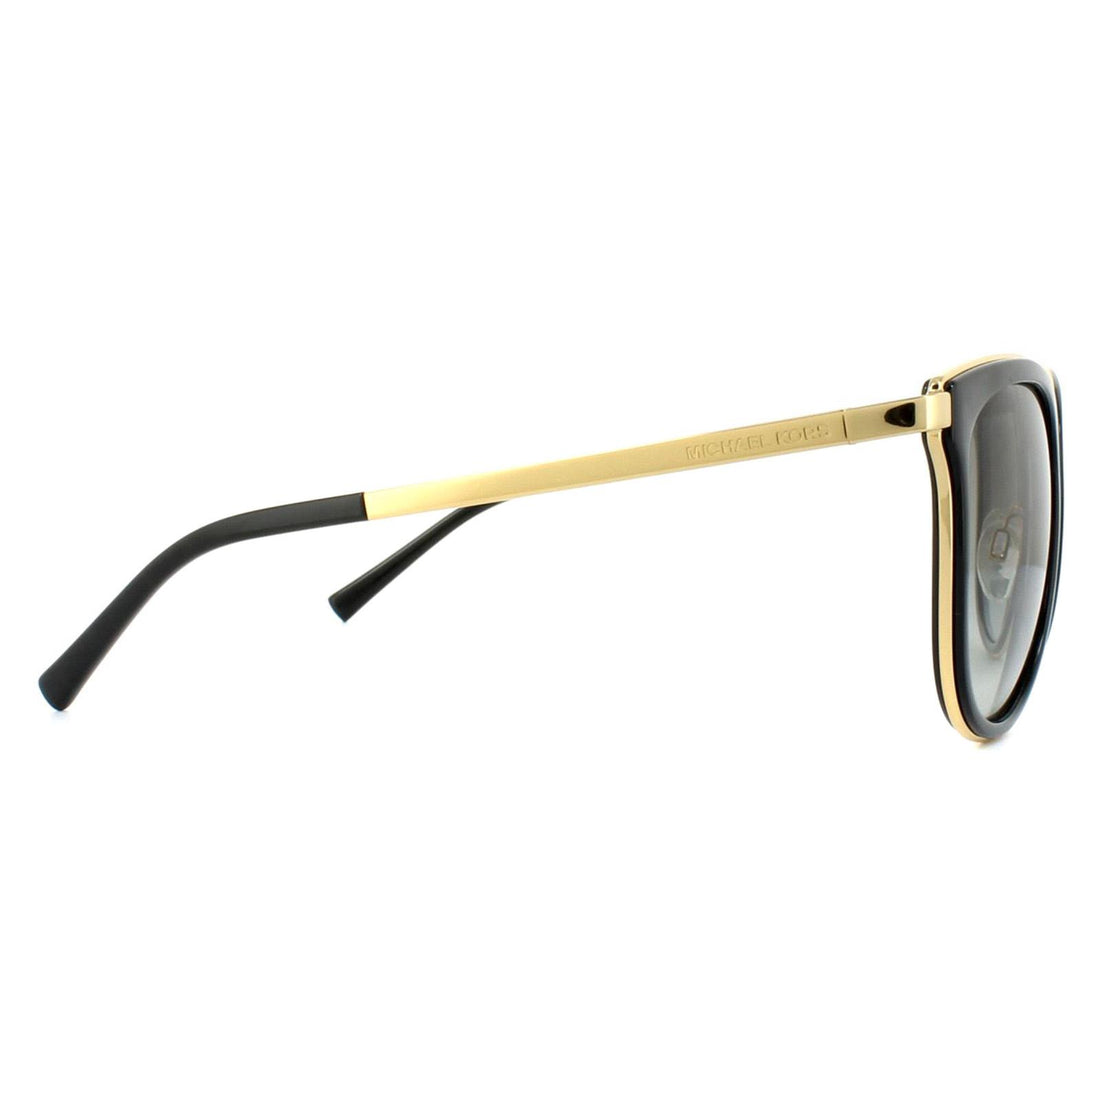 Michael Kors Sunglasses Adrianna 1 1010 110011 Black Gold Grey Gradient